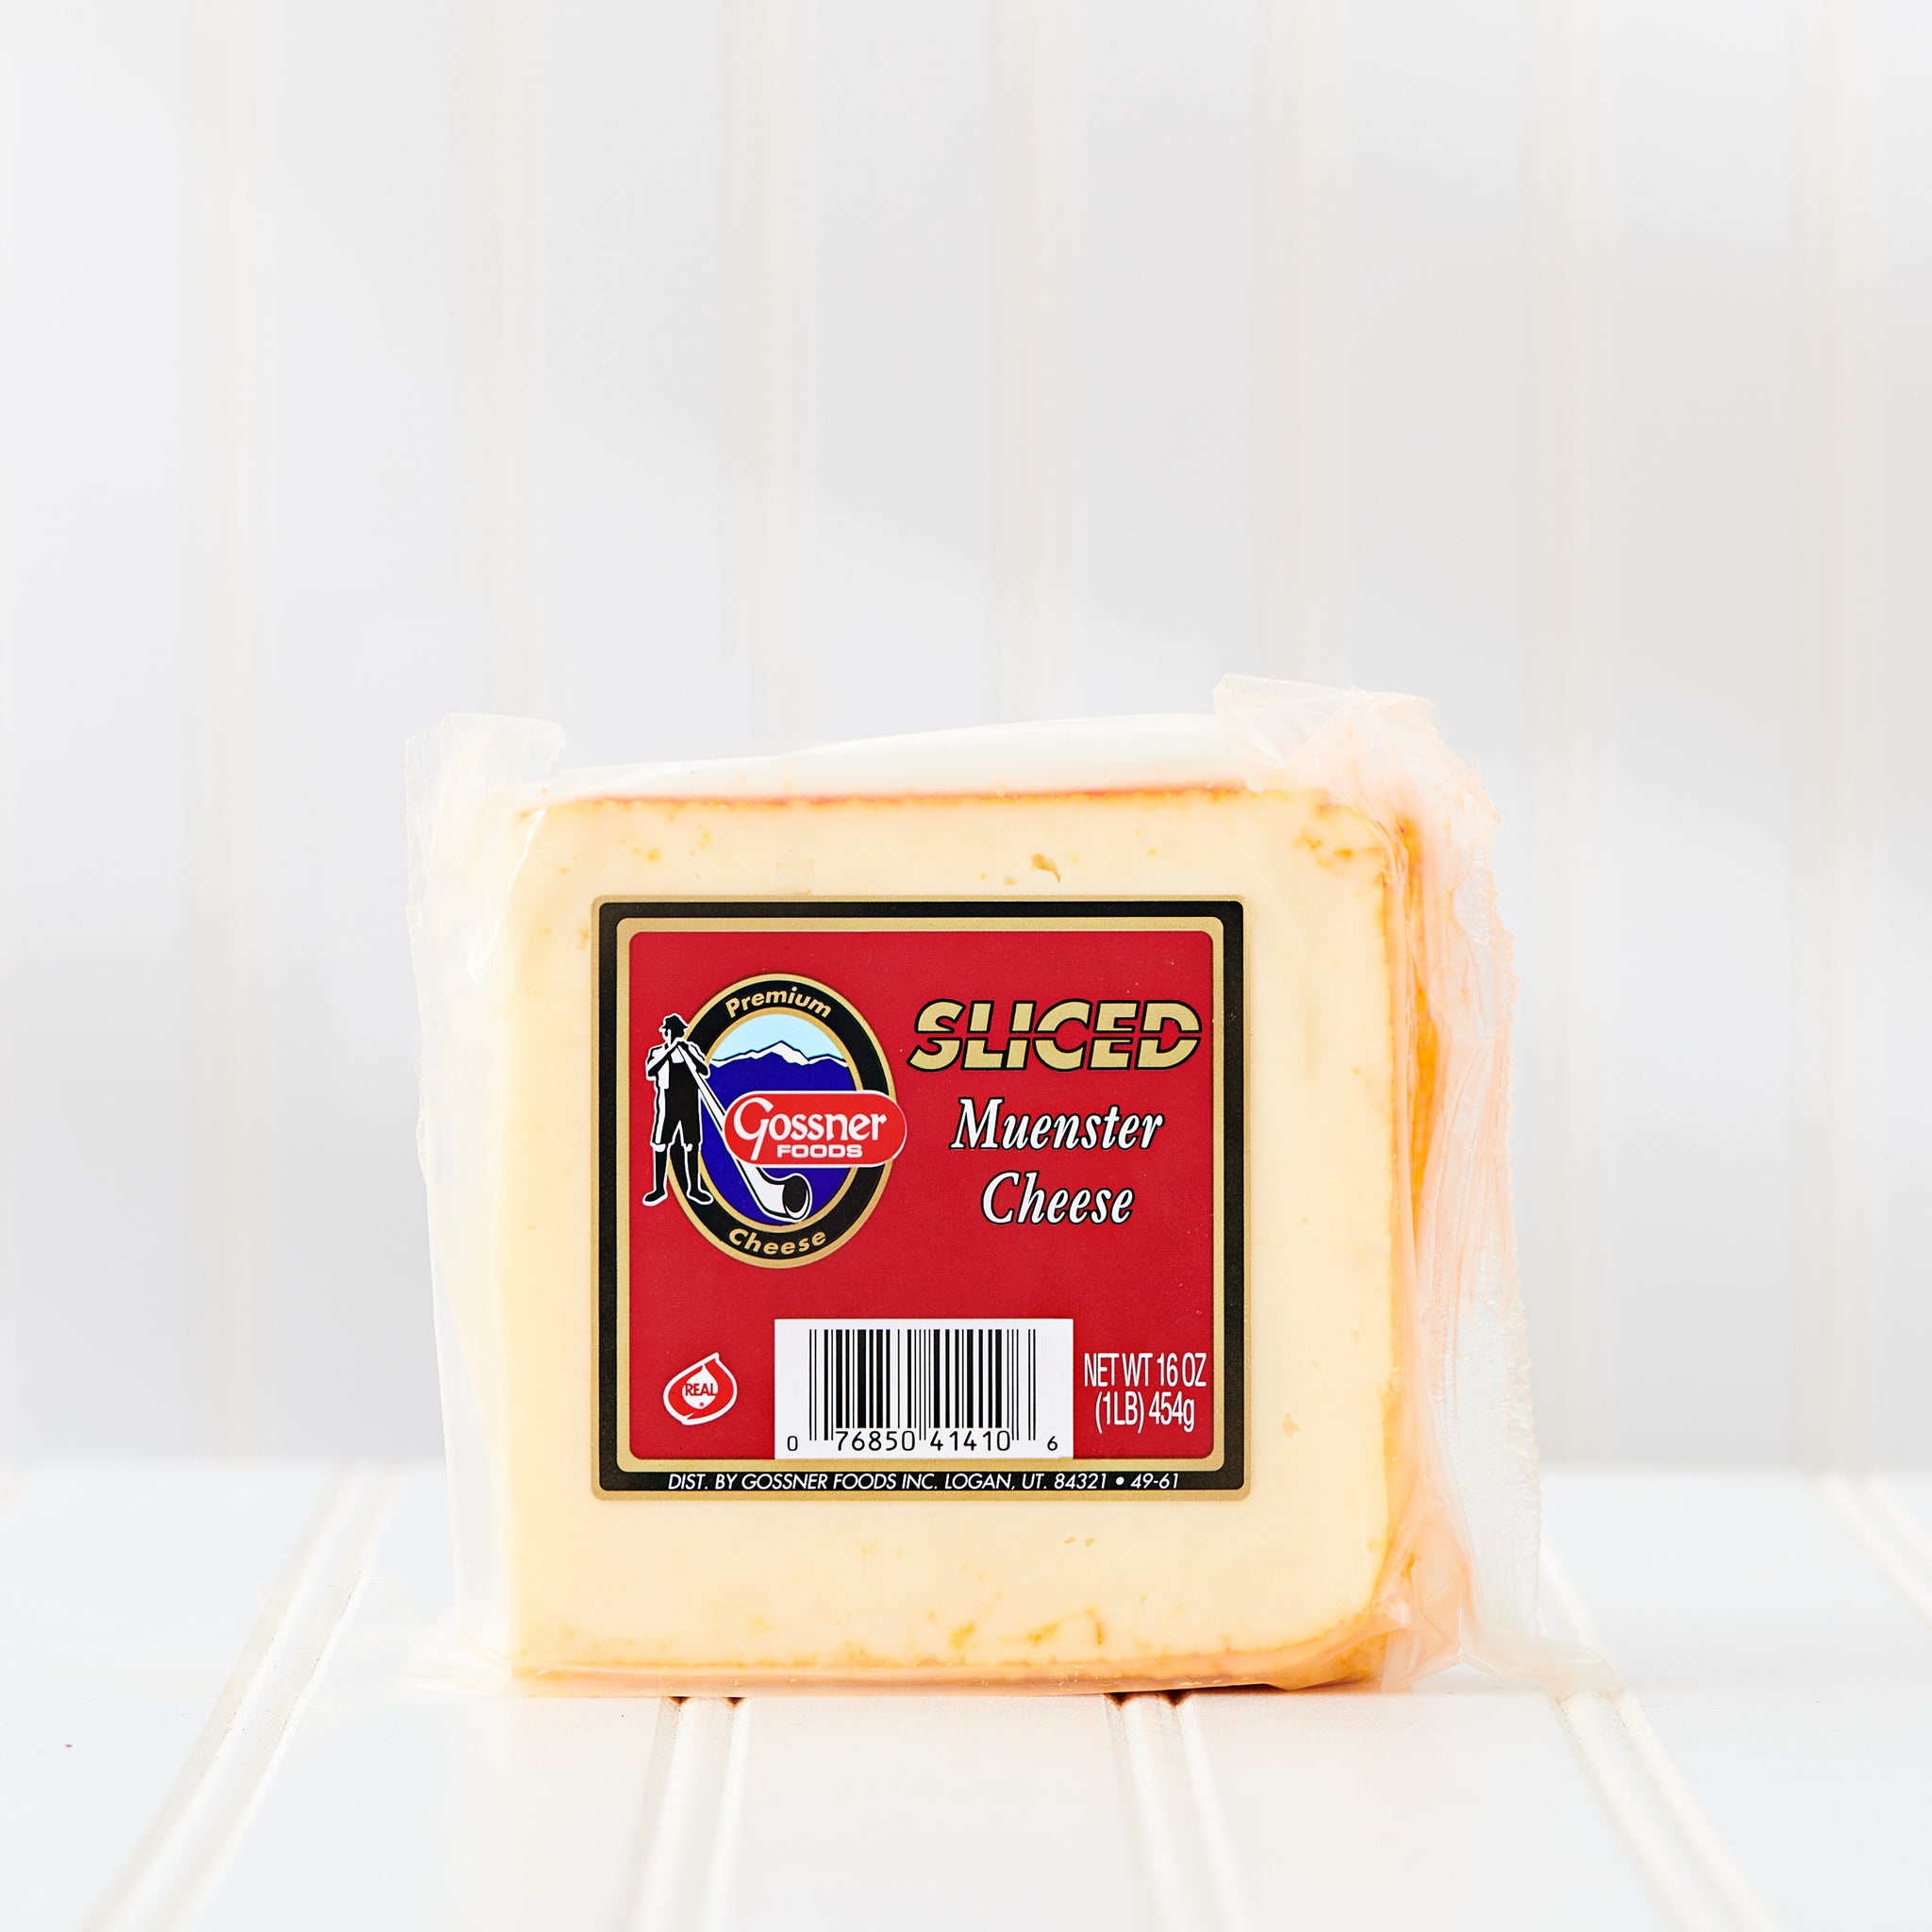 Gossner Foods® Sliced Muenster Cheese